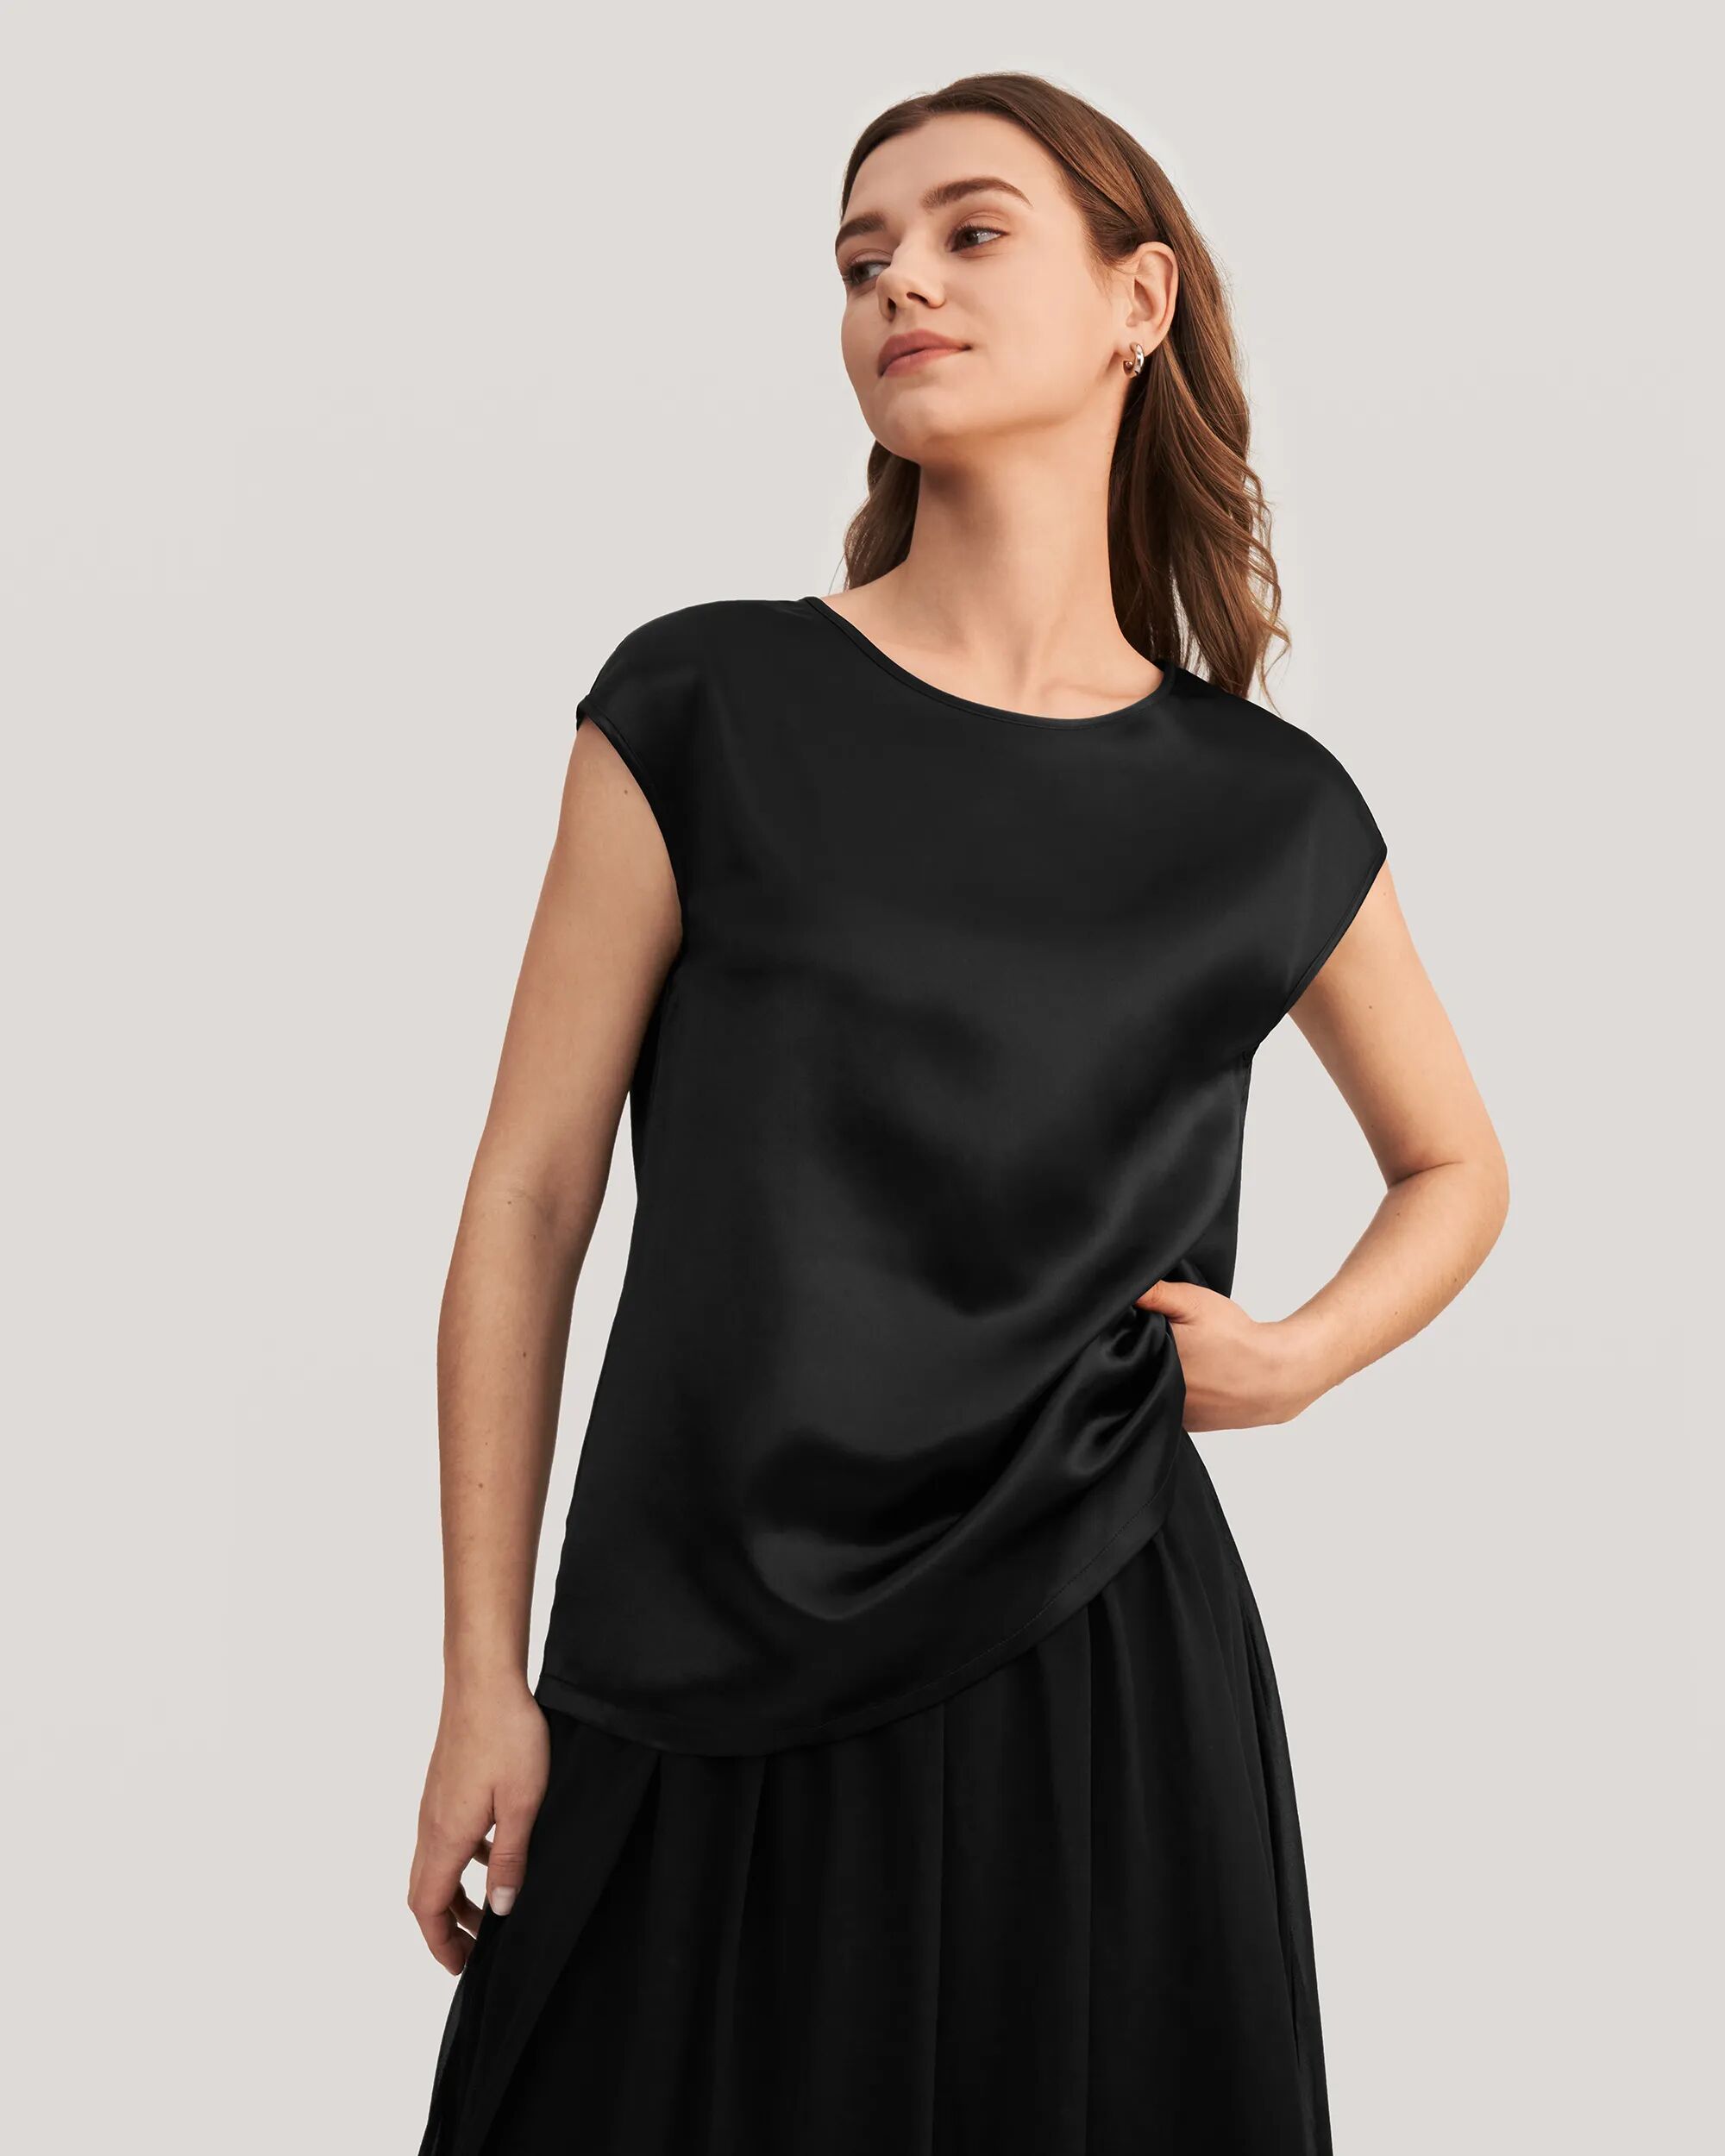 LILYSILK Silk T Shirt For Women OEKO-Tex Silk Clothes Glossy Silk Shirts Short Sleeve Blouses Black L